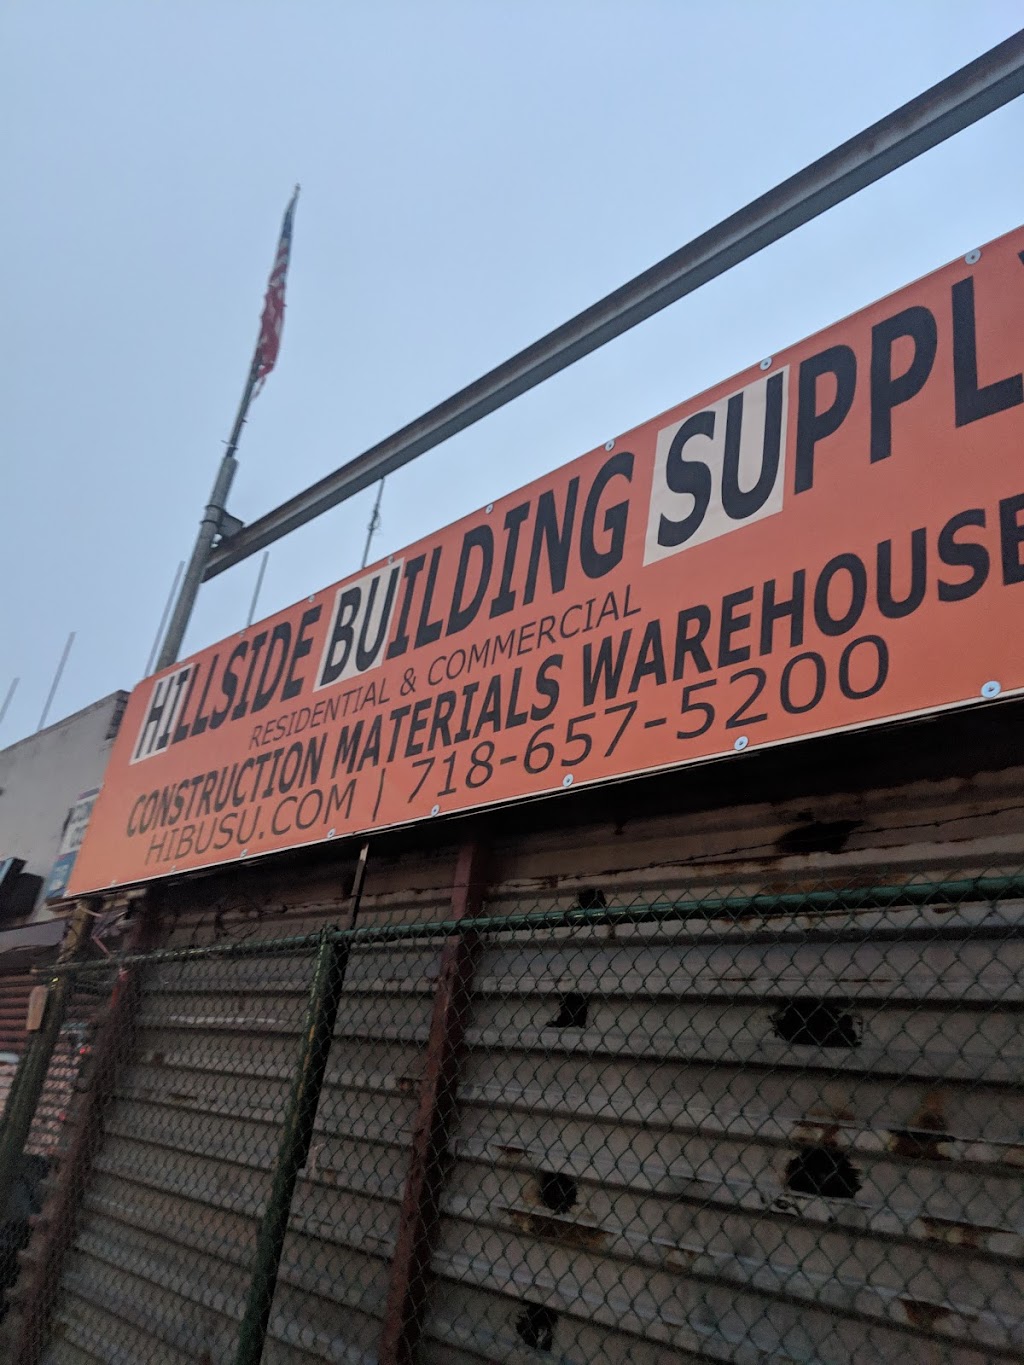 Hillside Building Supply (HIBUSU) | 131-17 Hillside Avenue, Richmond Hill, NY 11418, USA | Phone: (718) 657-5200